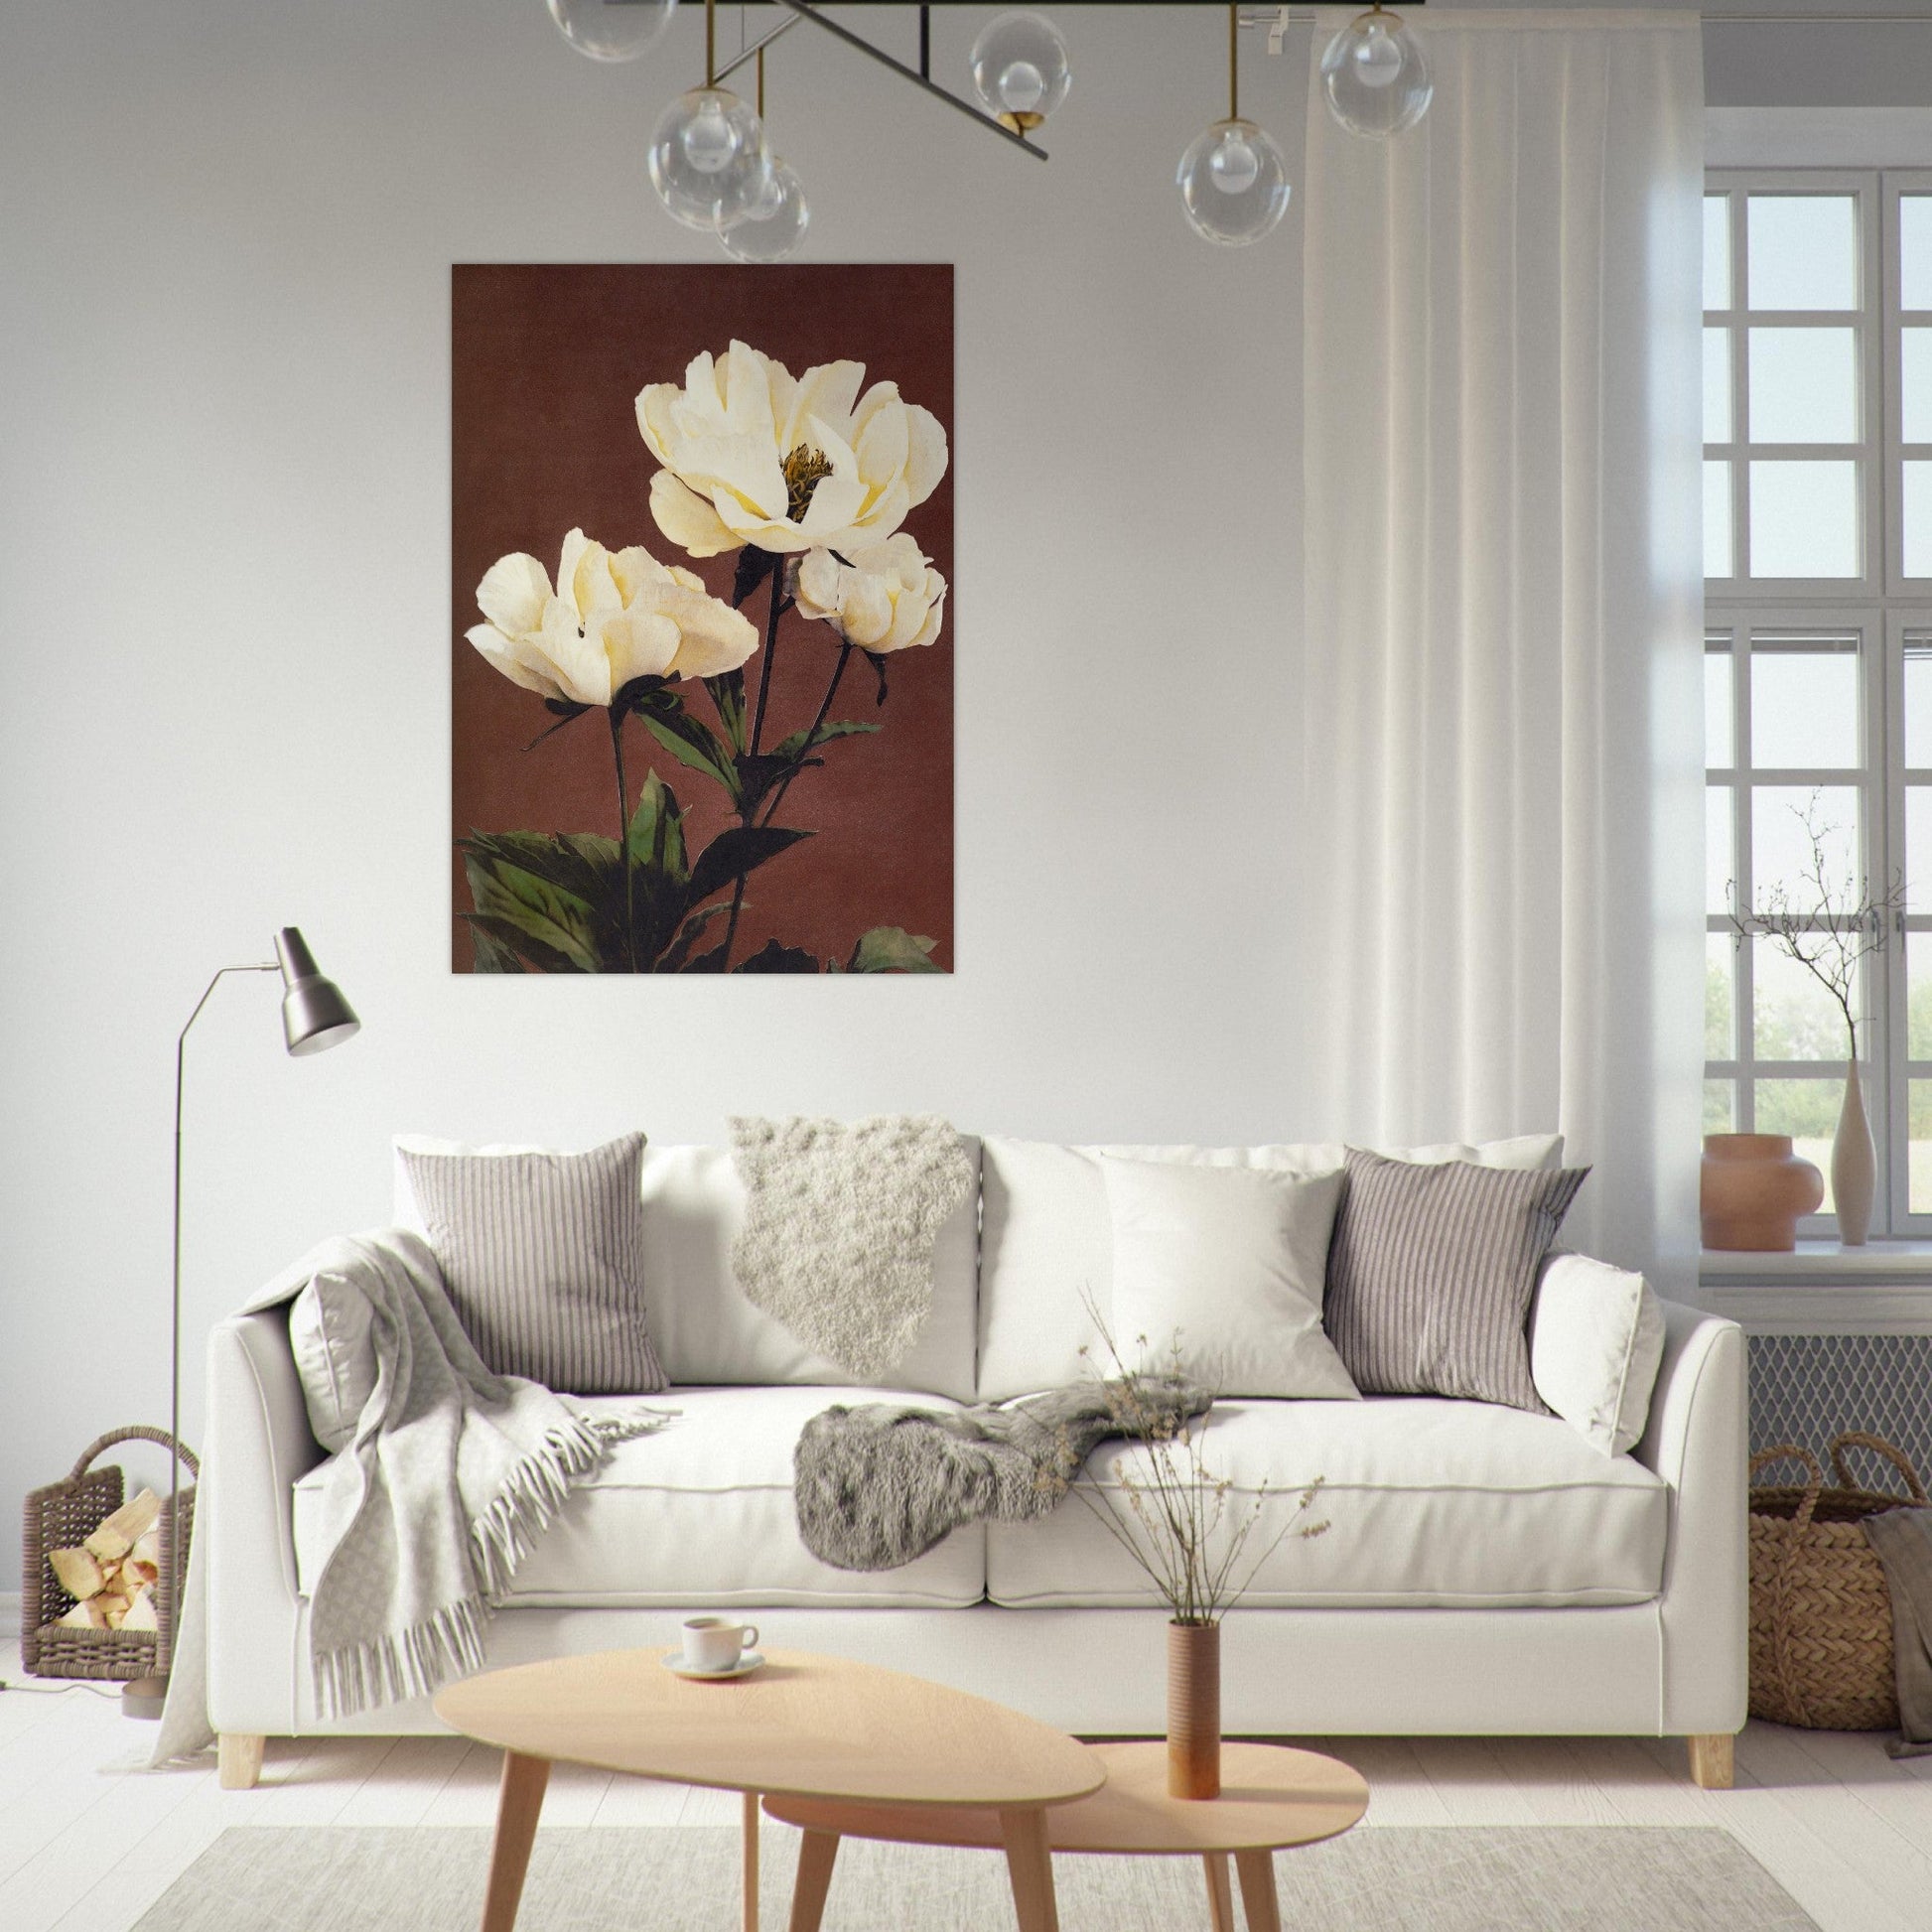 White Roses, Vintage Art print, vintage floral art print, White Roses, #illieeart